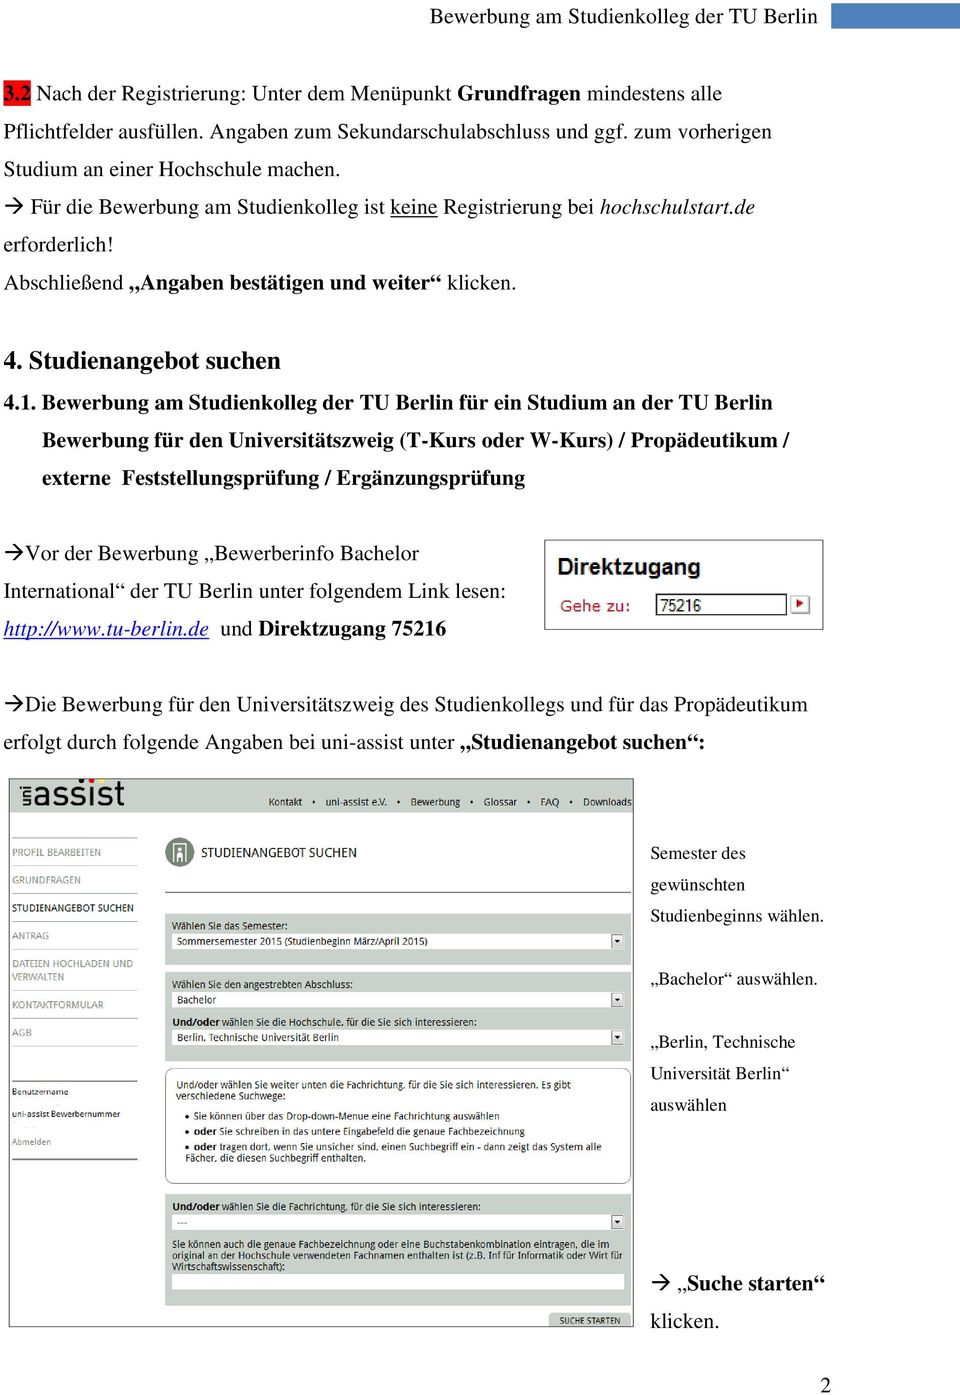 Bewerbung am Studienkolleg der TU Berlin für ein Studium an der TU Berlin Bewerbung für den Universitätszweig (T-Kurs oder W-Kurs) / Propädeutikum / externe Feststellungsprüfung / Ergänzungsprüfung